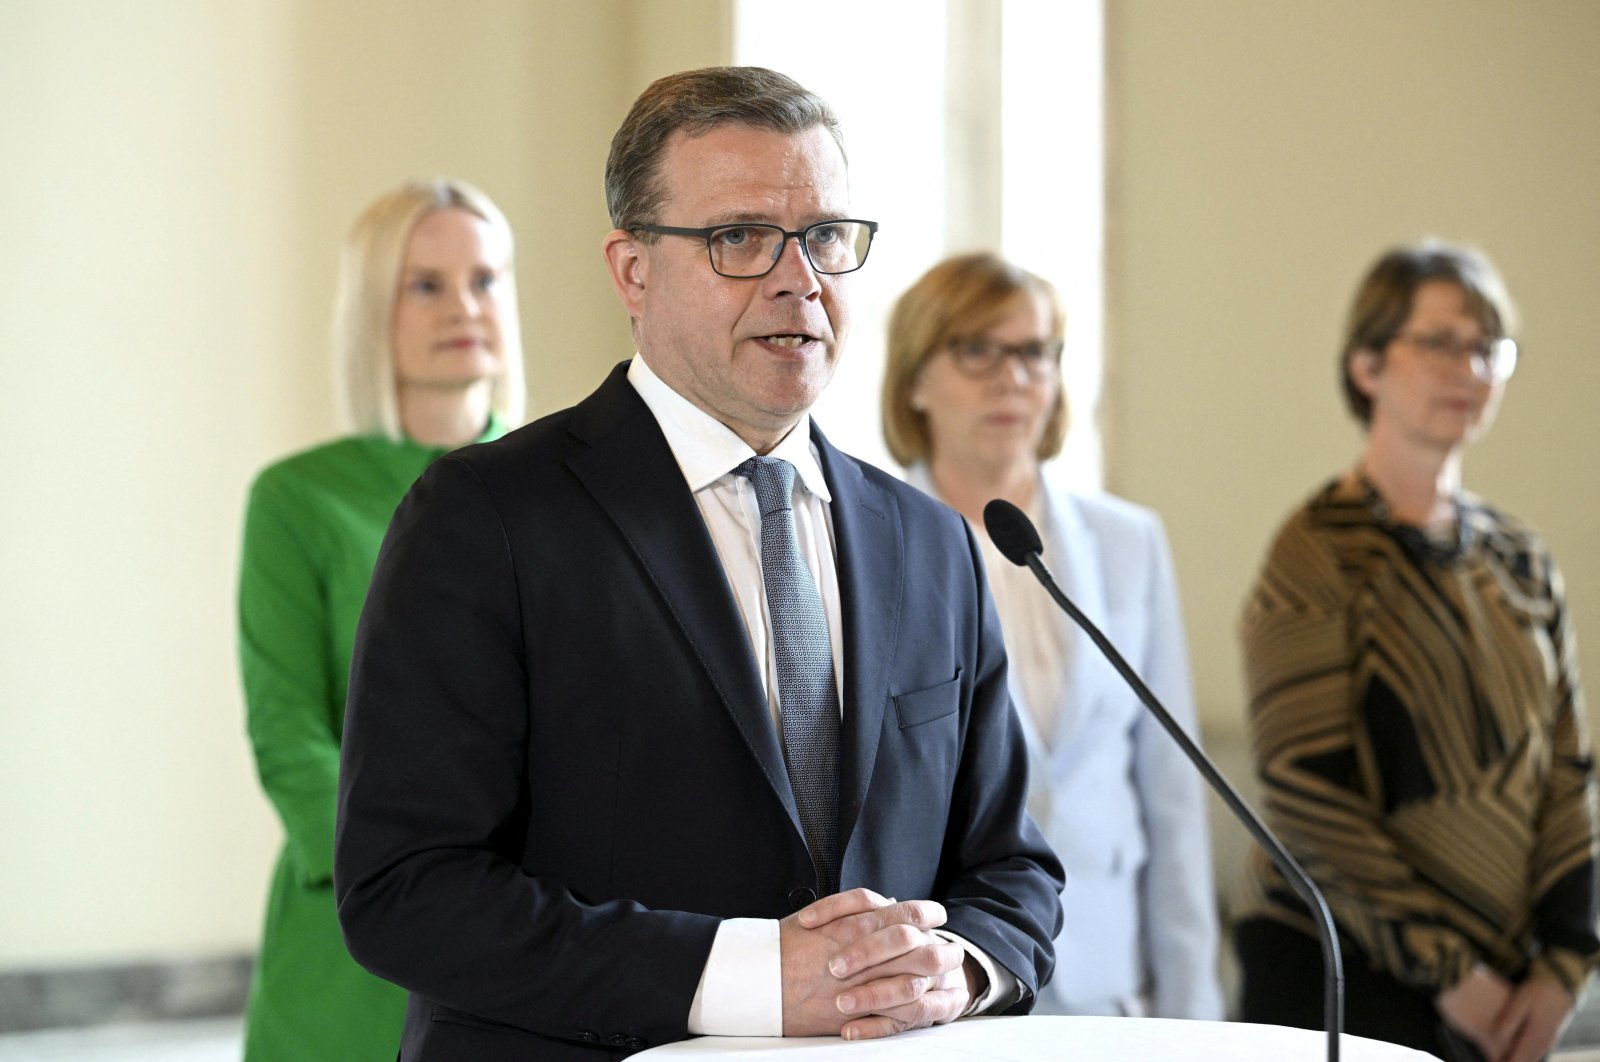 PM Finlandia yang ditunjuk untuk mencari koalisi dengan sayap kanan Partai Finlandia